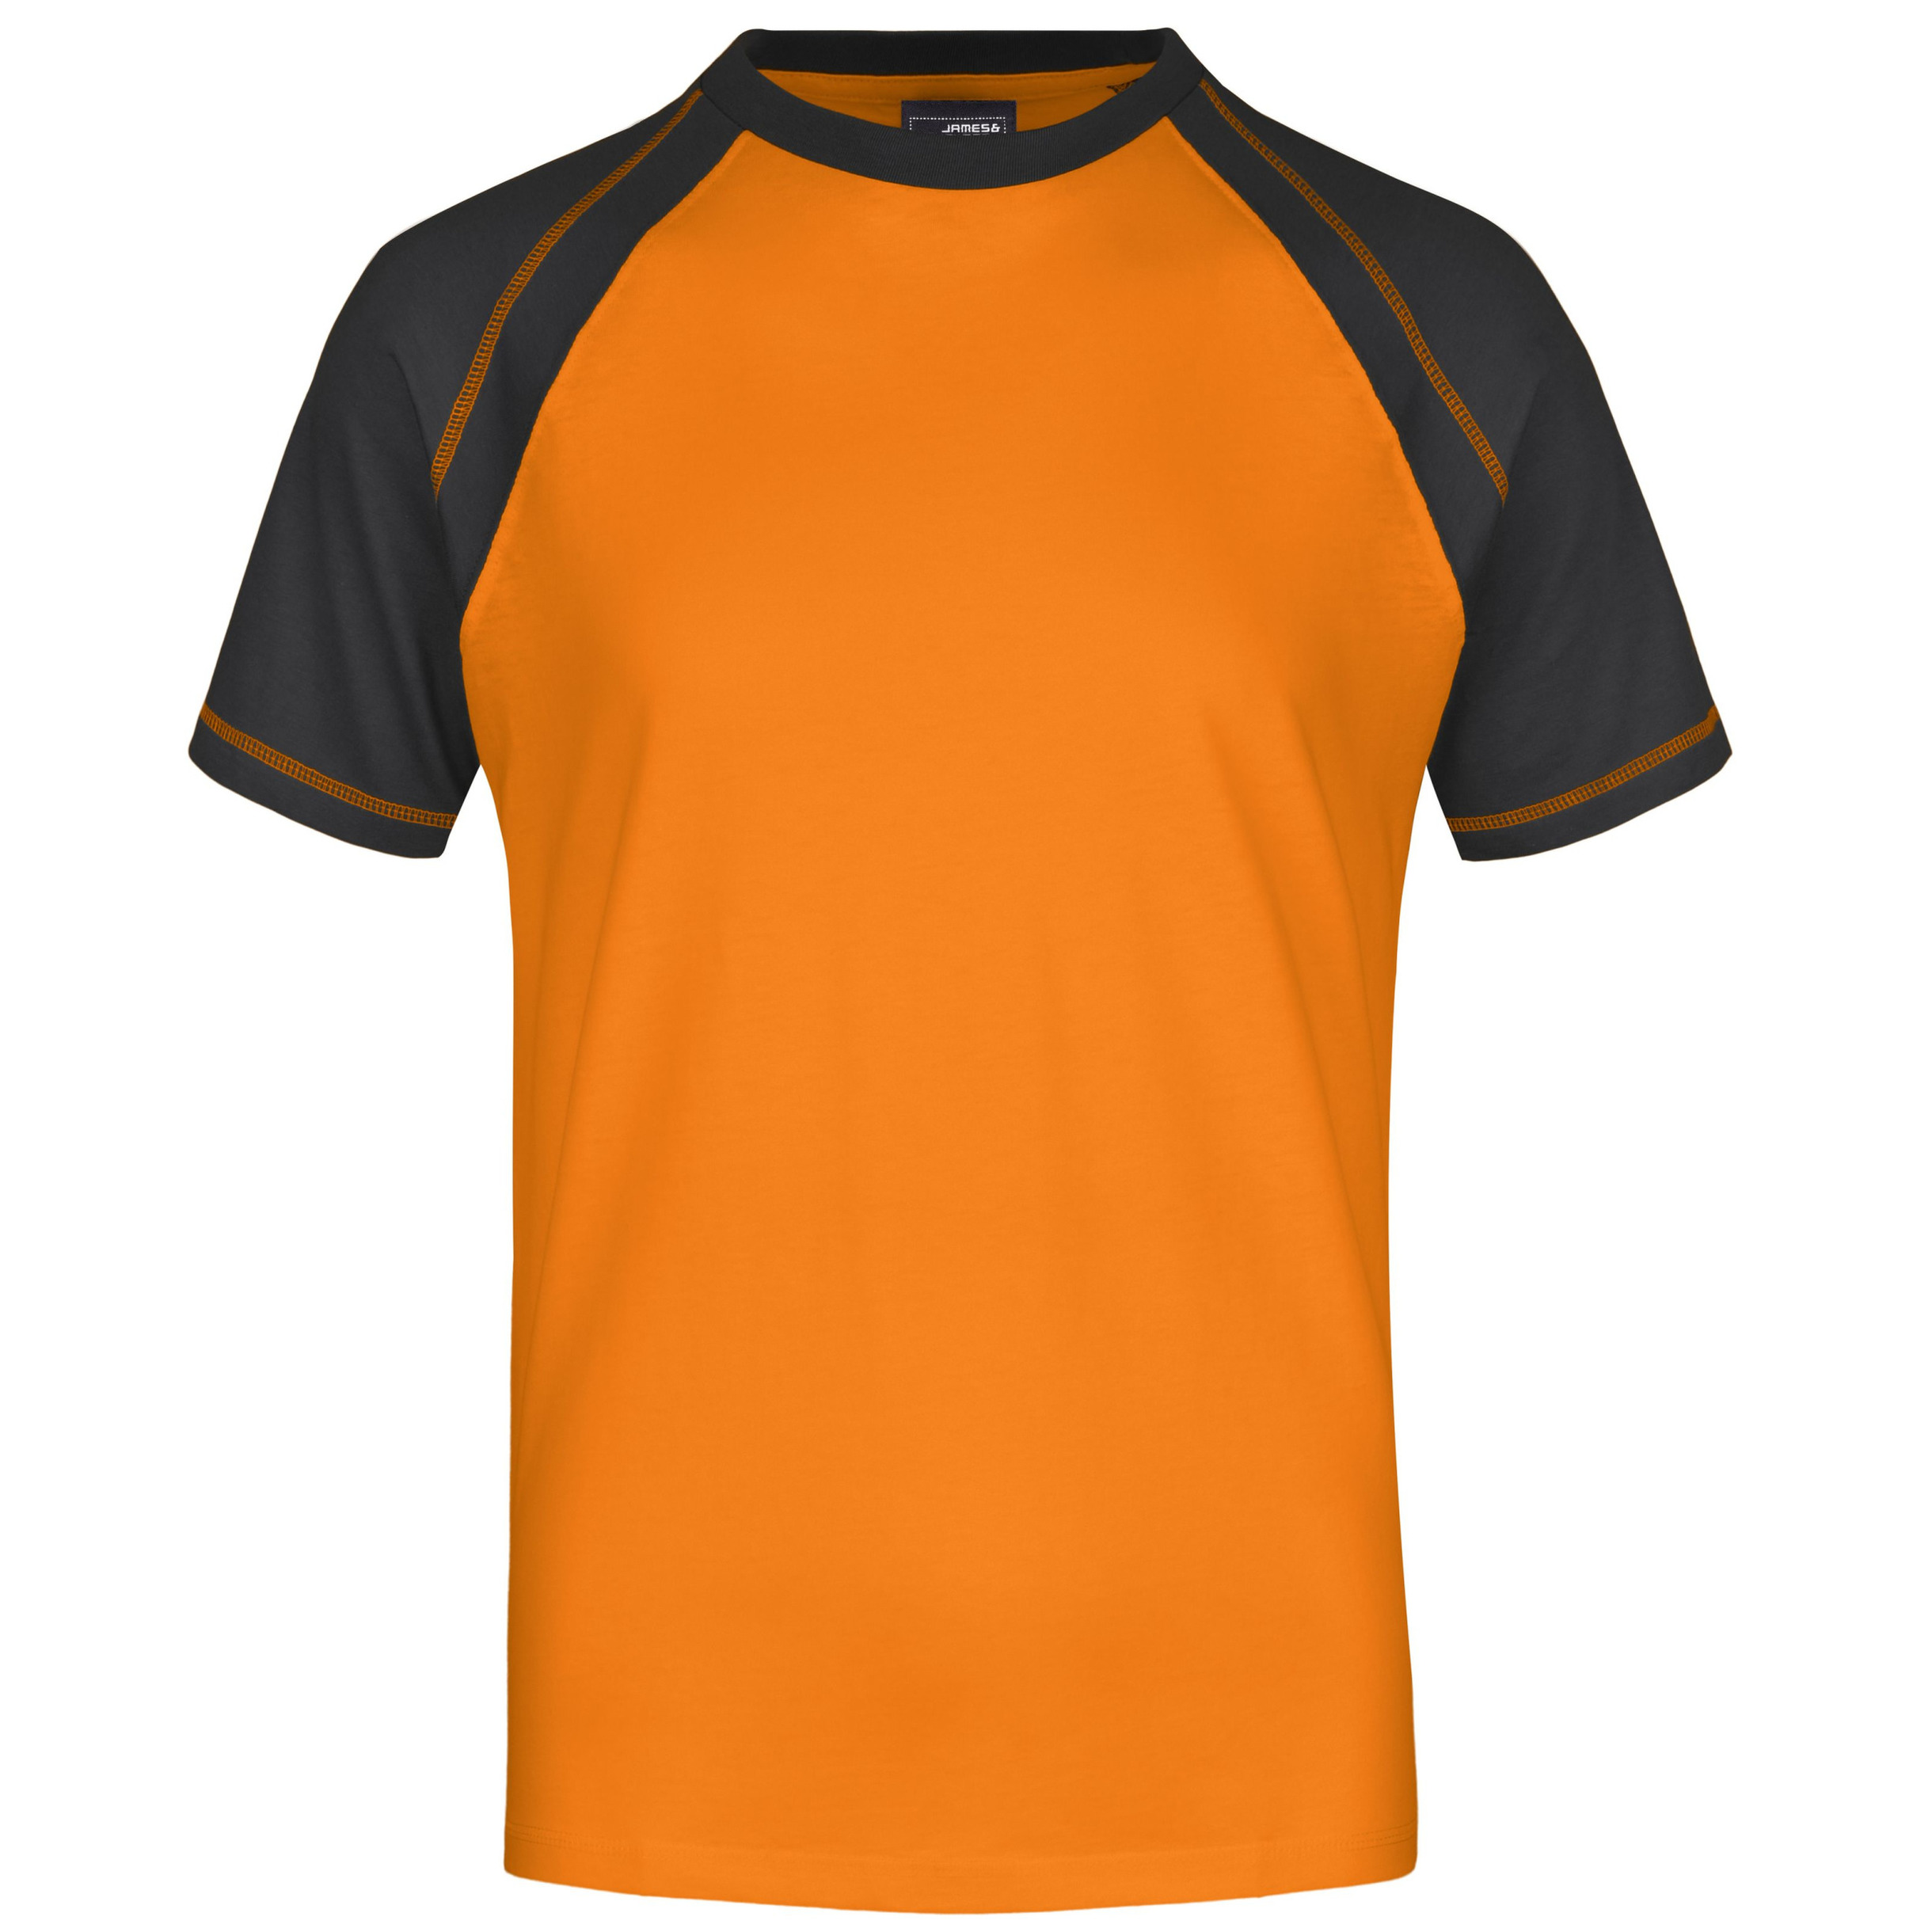 Heren t-shirt oranje-zwart